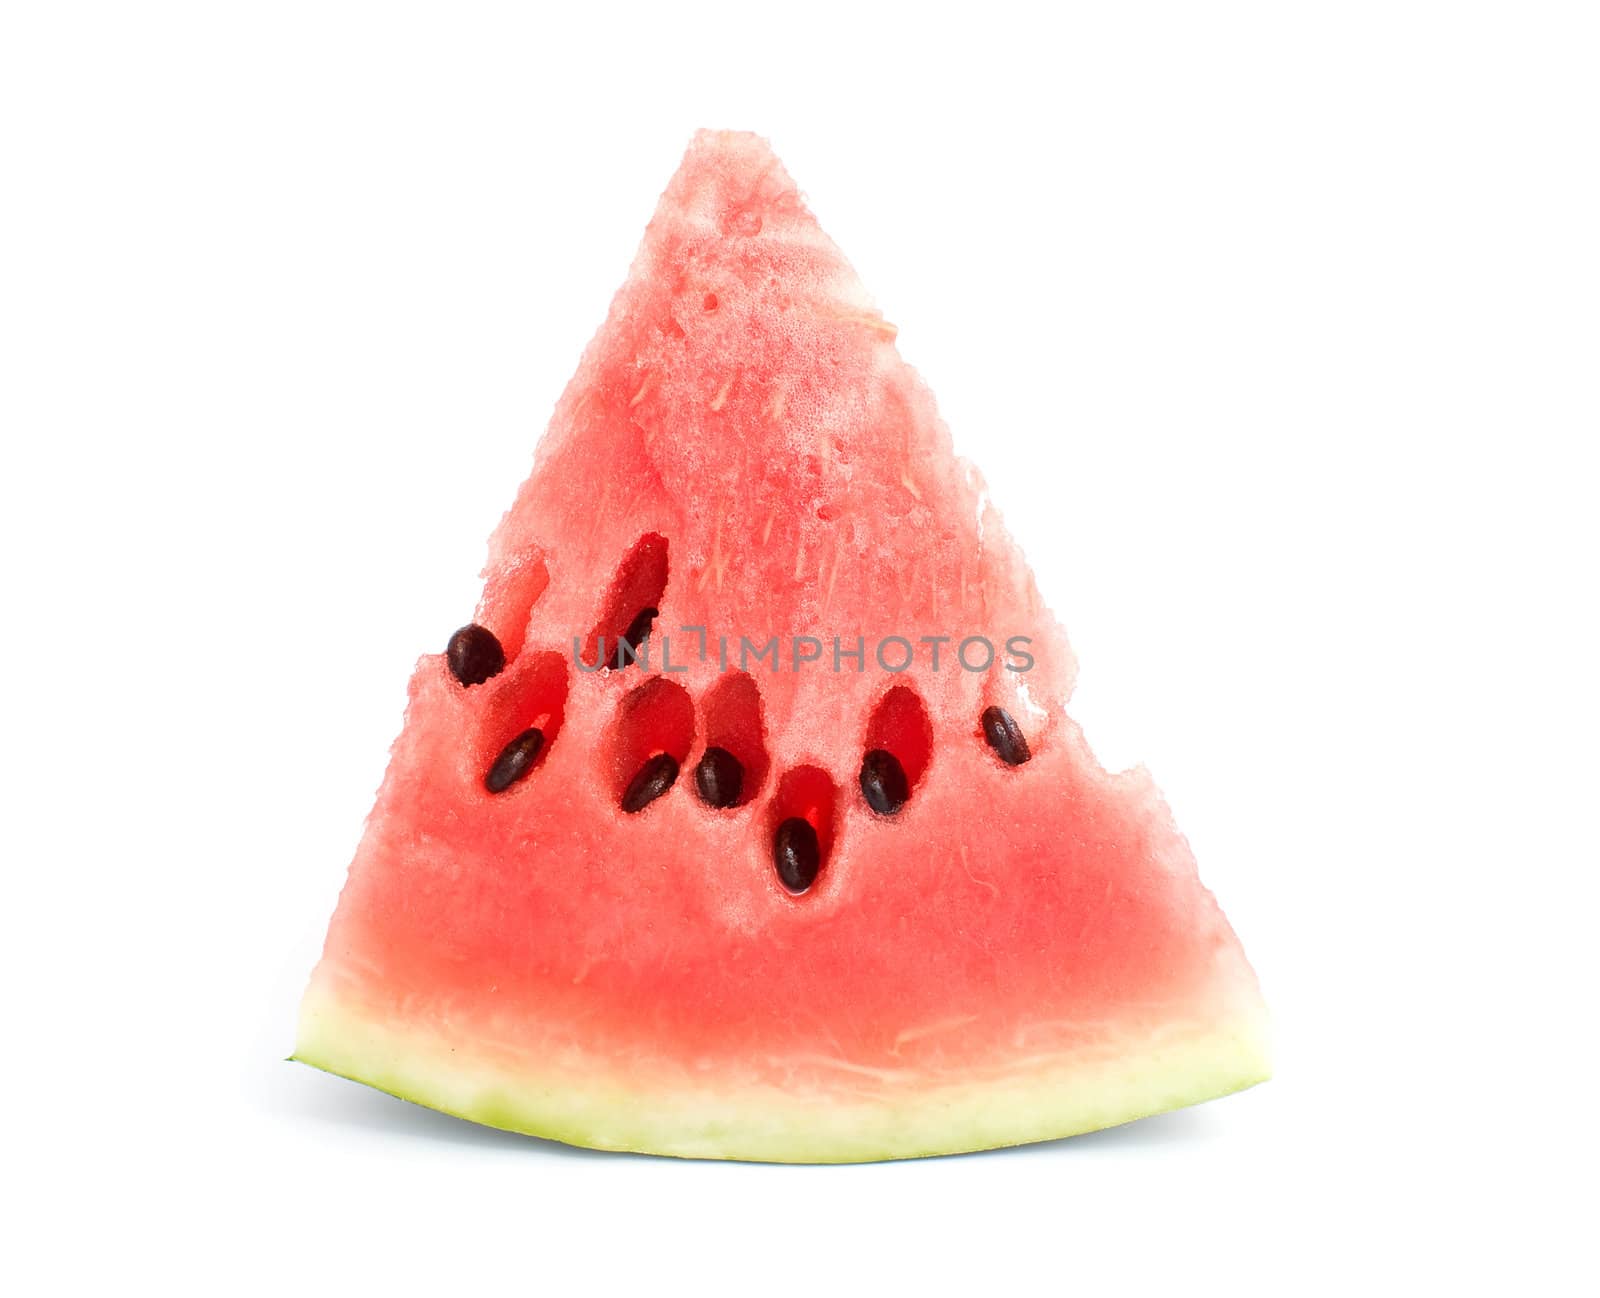 watermelon

